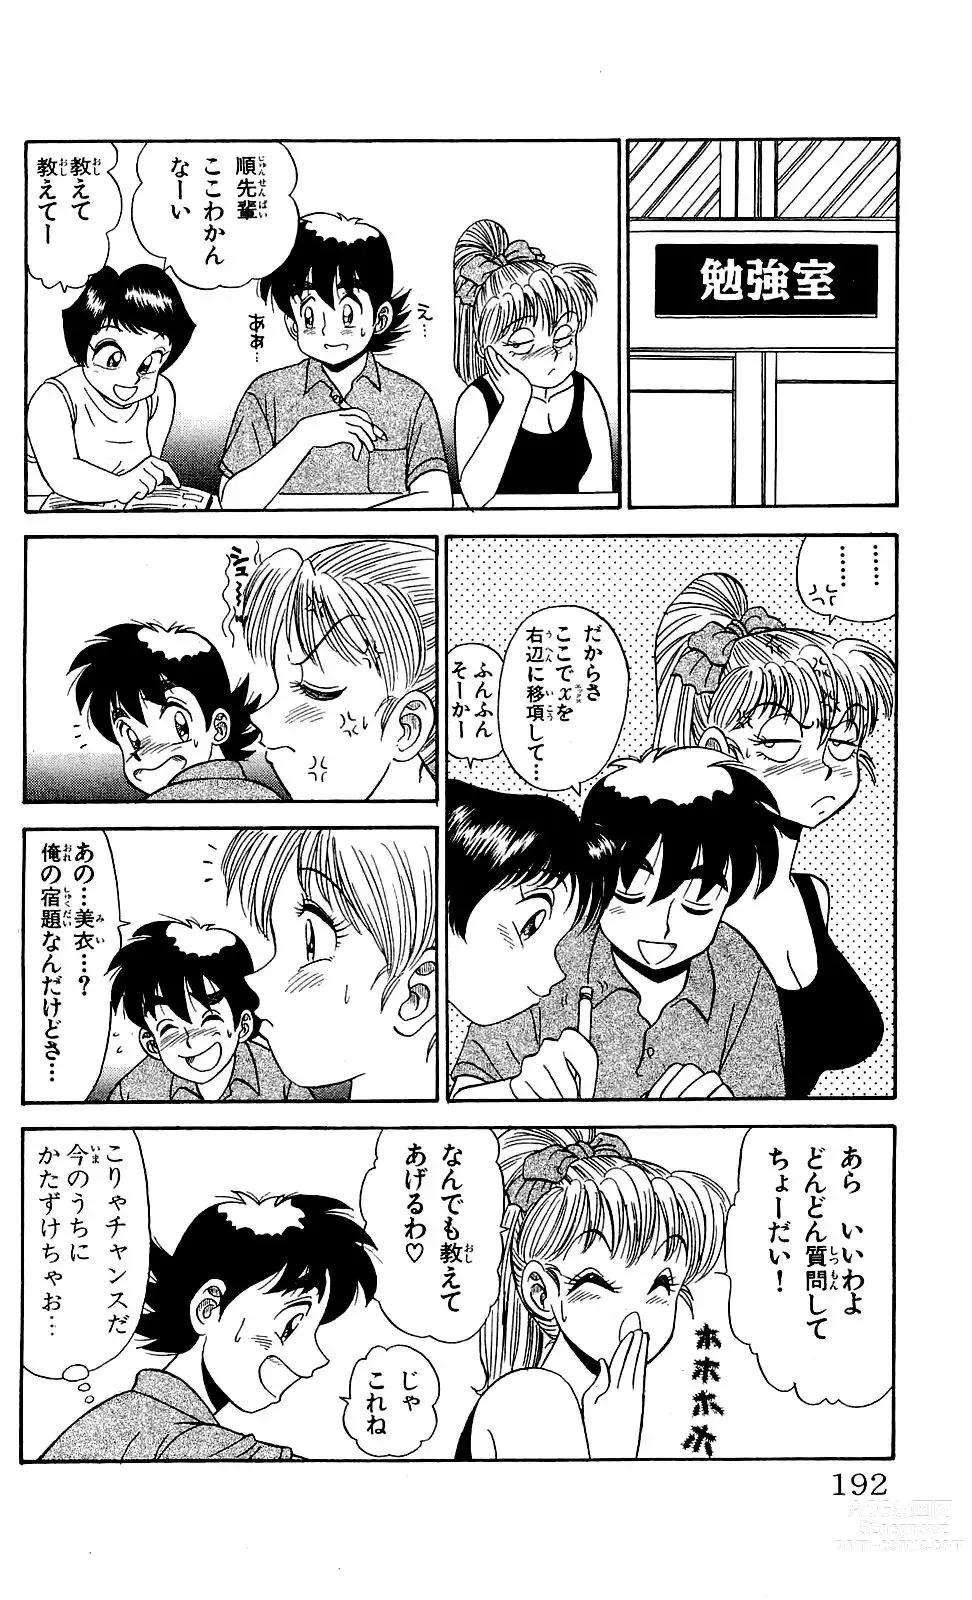 Page 190 of manga Orette Piyoritan Vol. 1